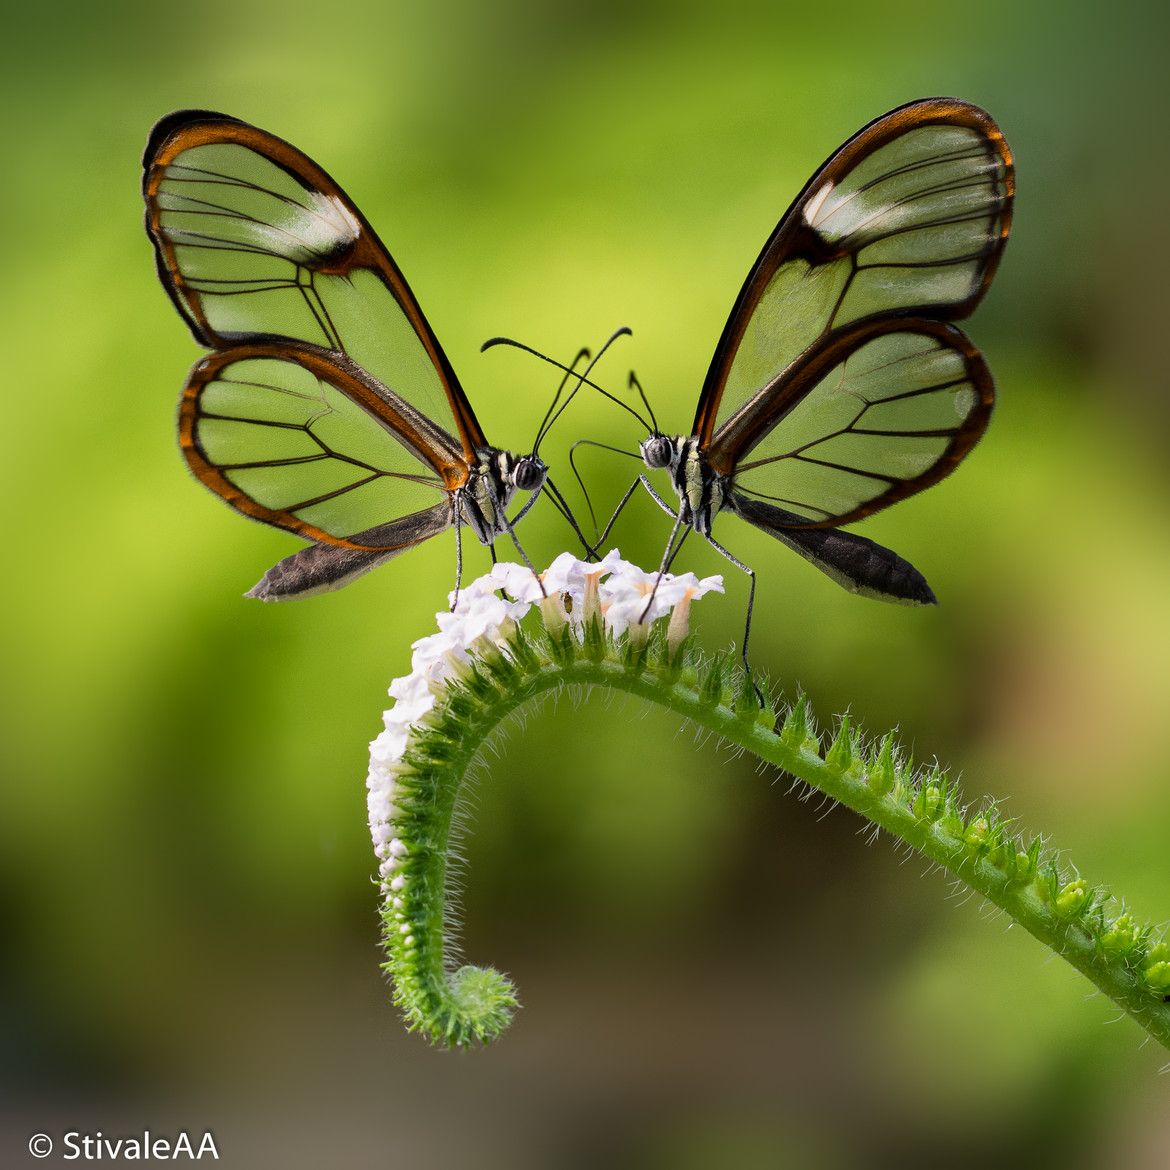 beautiful glass winged butterfly image stivaleaa